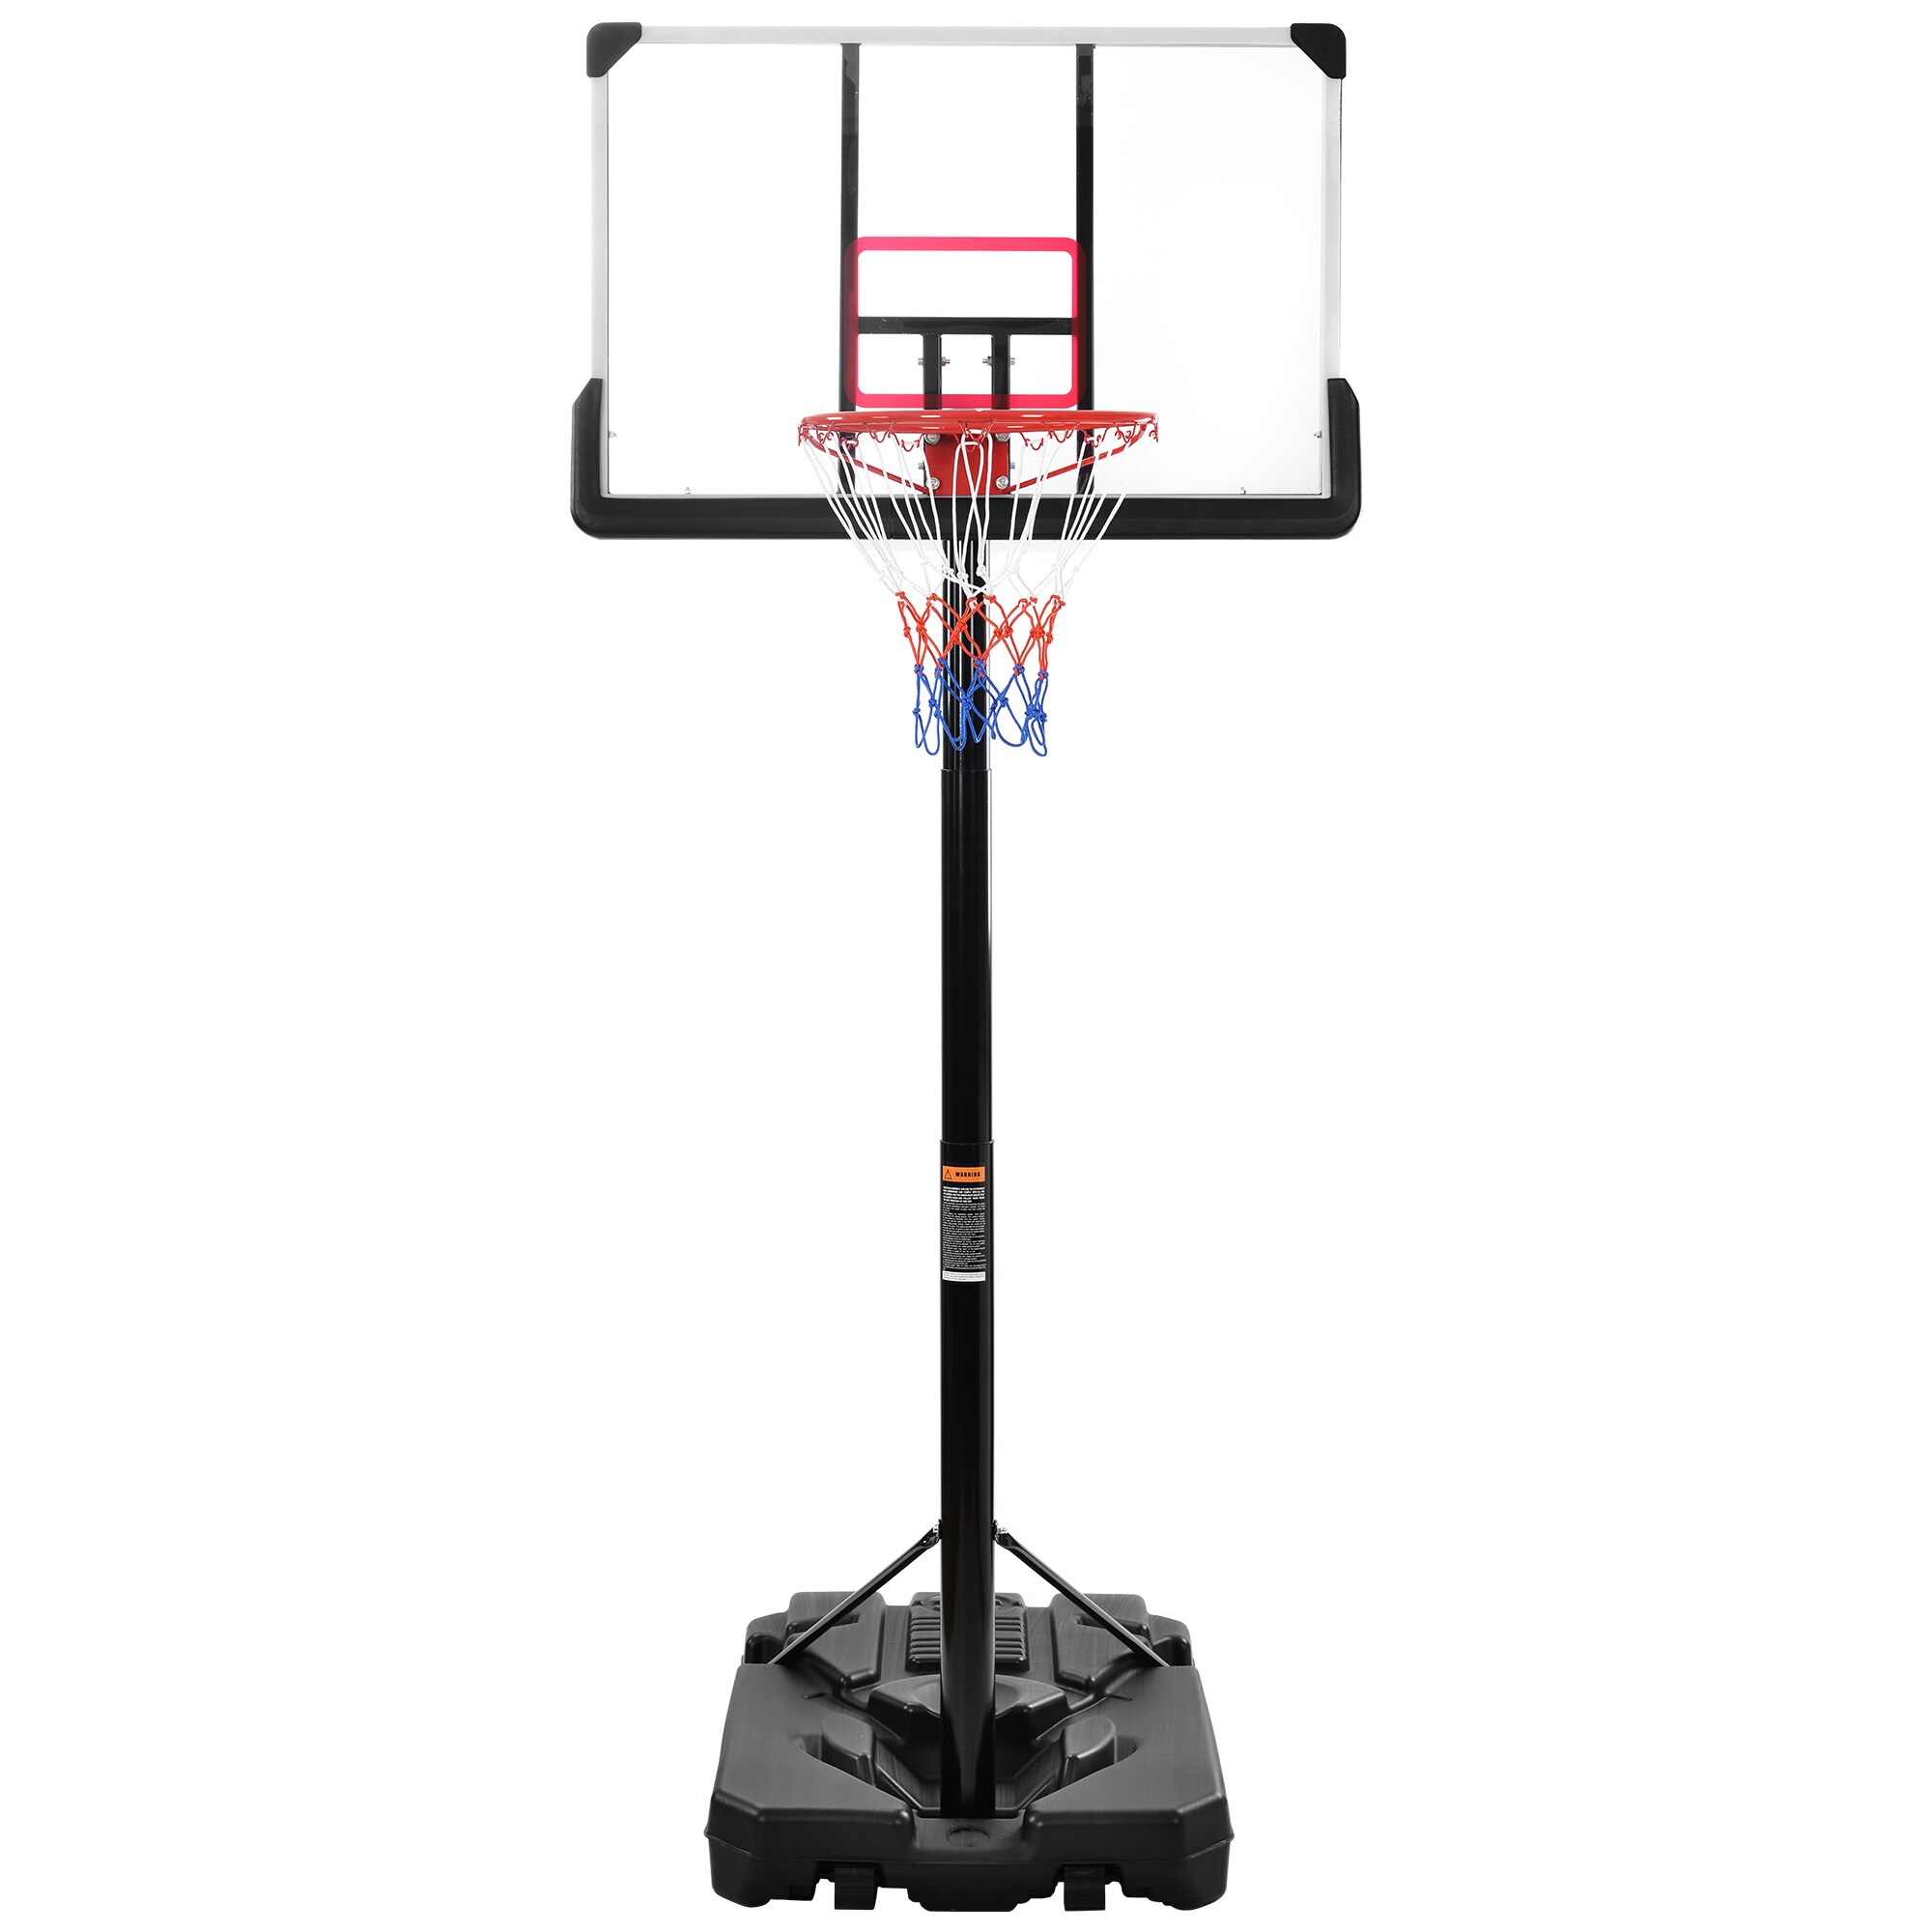 maocao hoom 43.5 in. Outdoor Adjustable Portable Basketball Hoop